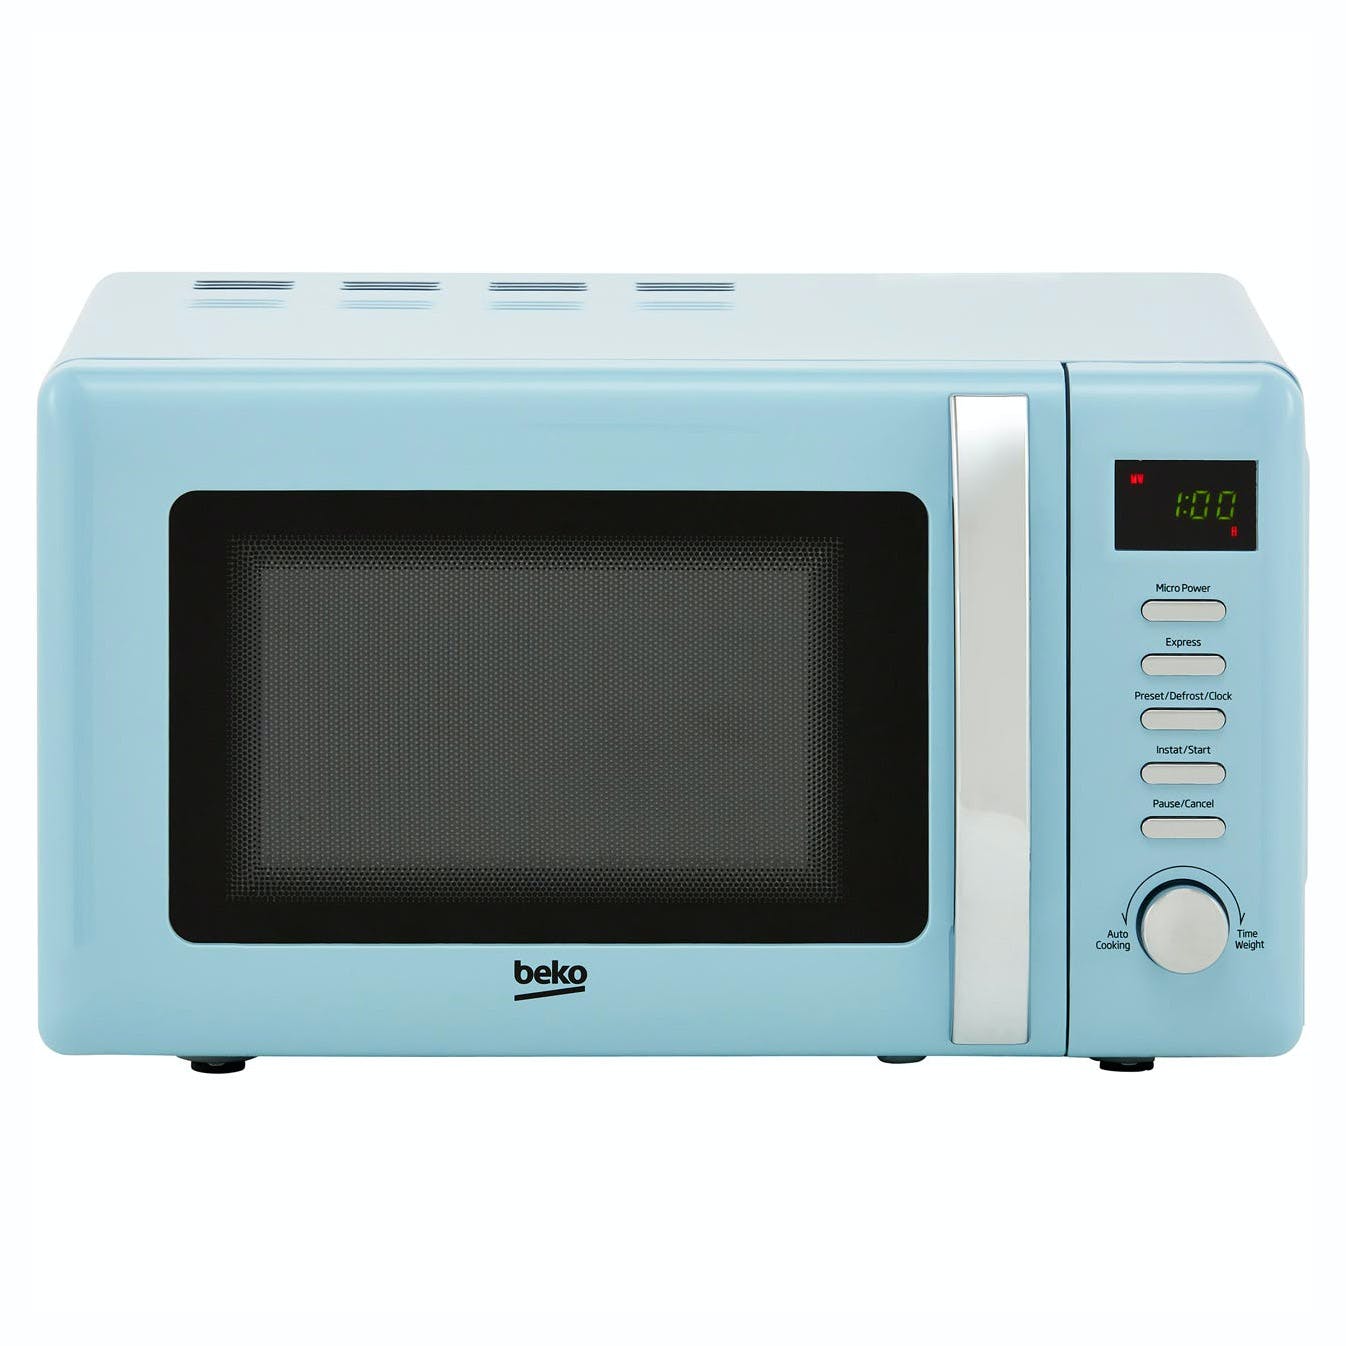 Beko Retro Microwave Mint blue